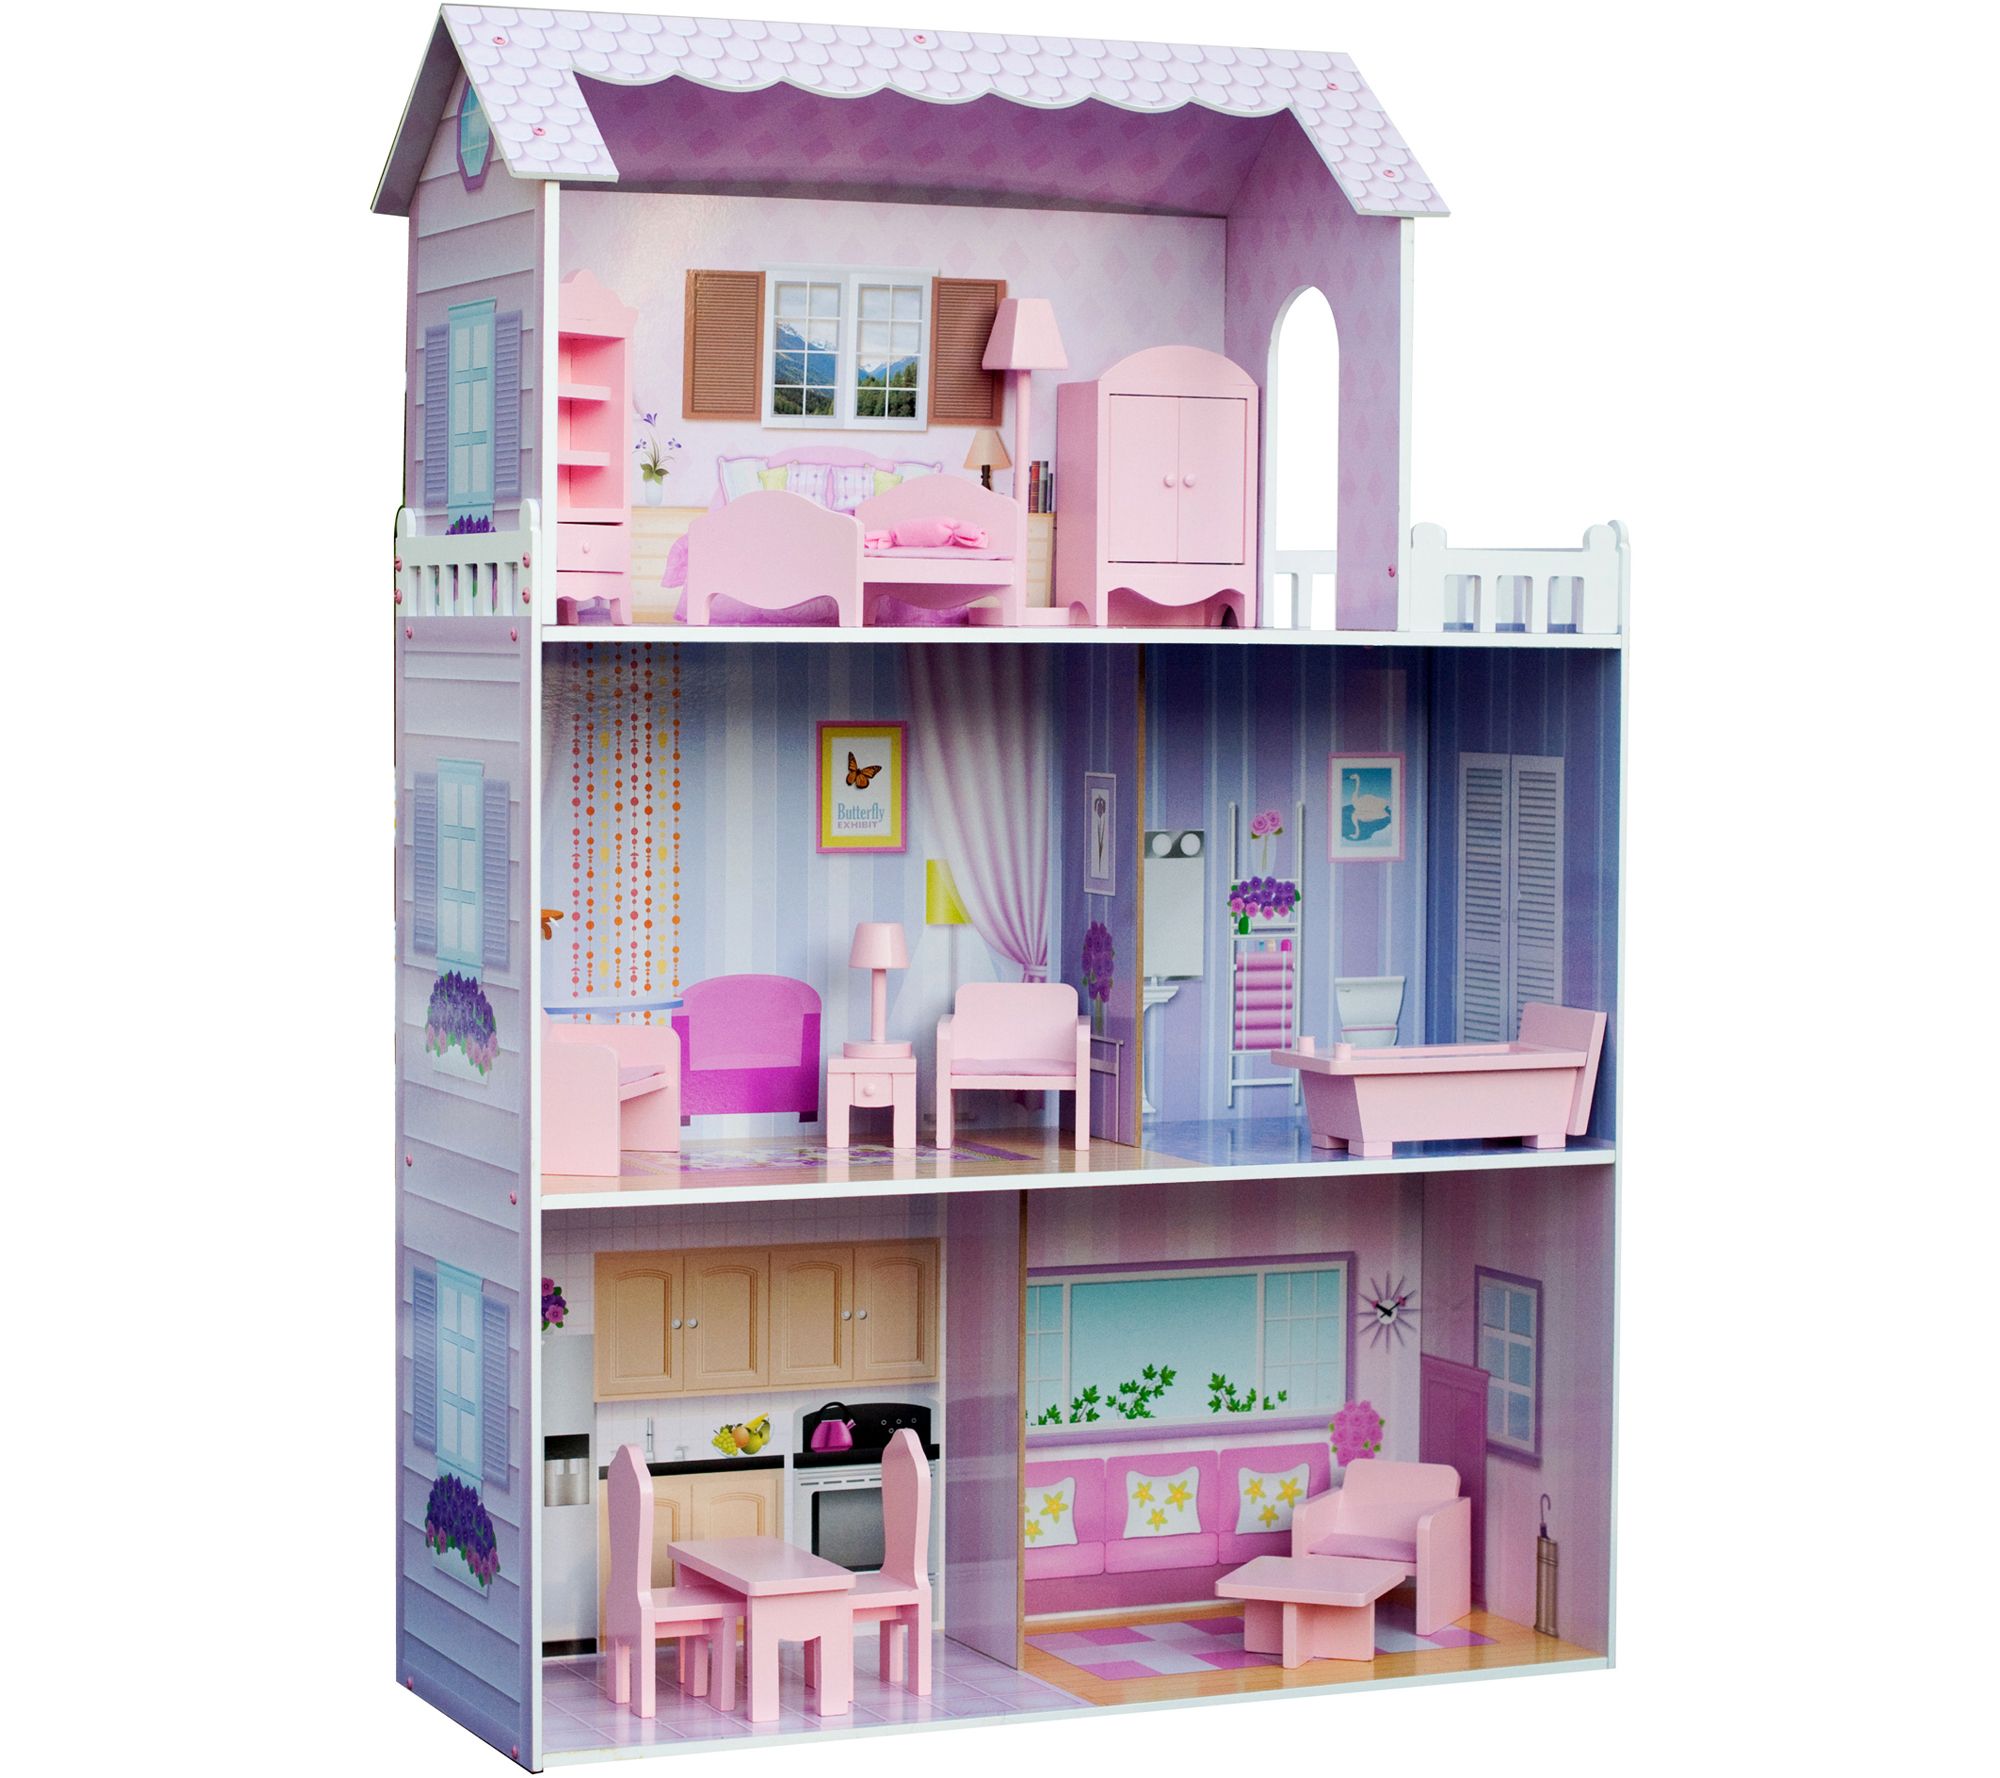 My Doll House: Pocket Dream - Apps on Google Play